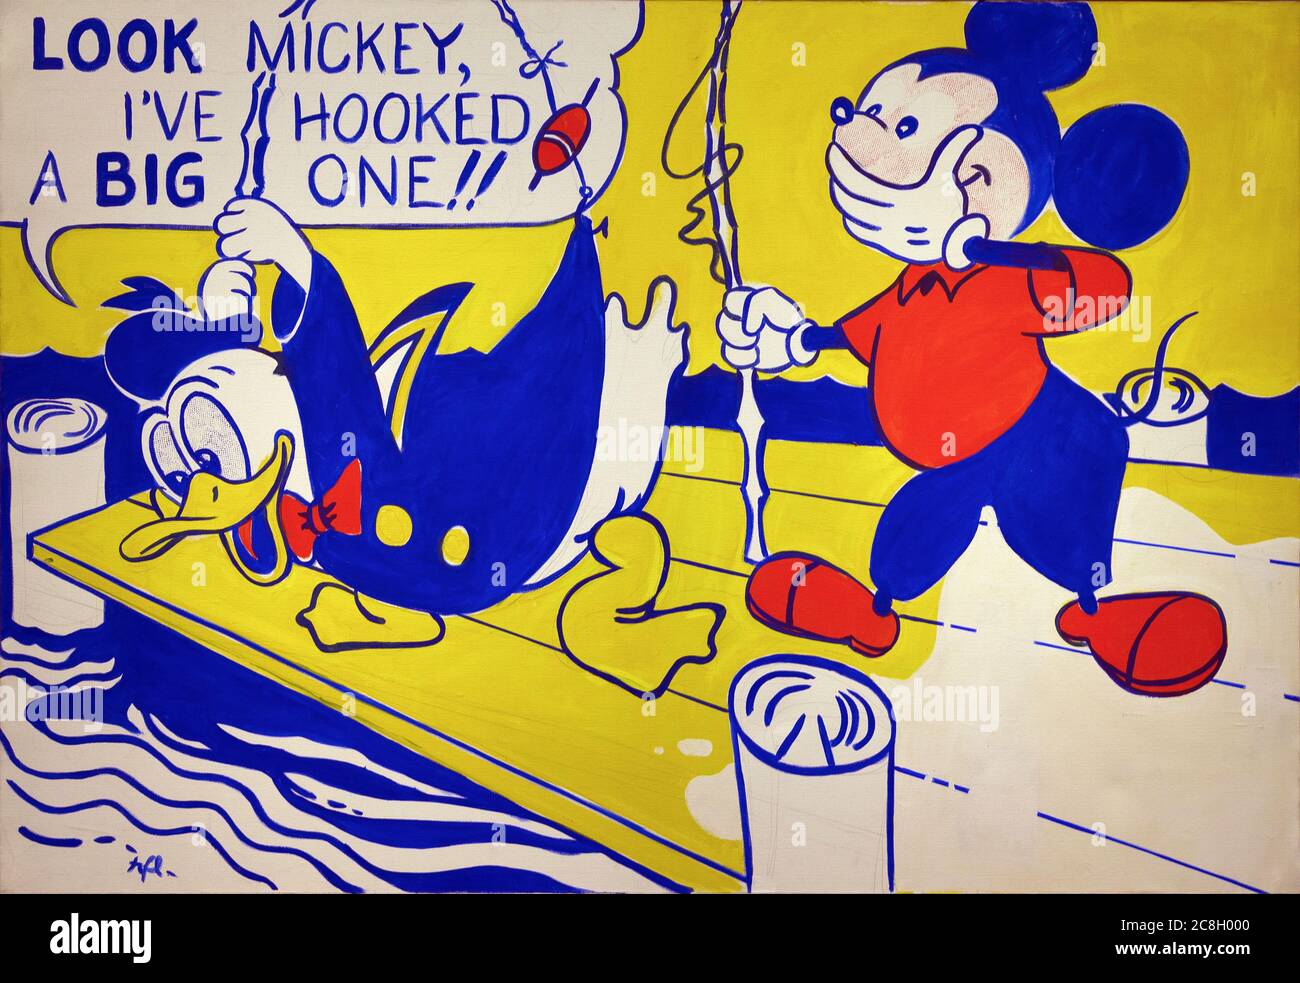 Look Mickey, Roy Lichtenstein, 1961, National Gallery of Art, Washington DC, USA, North America Stock Photo